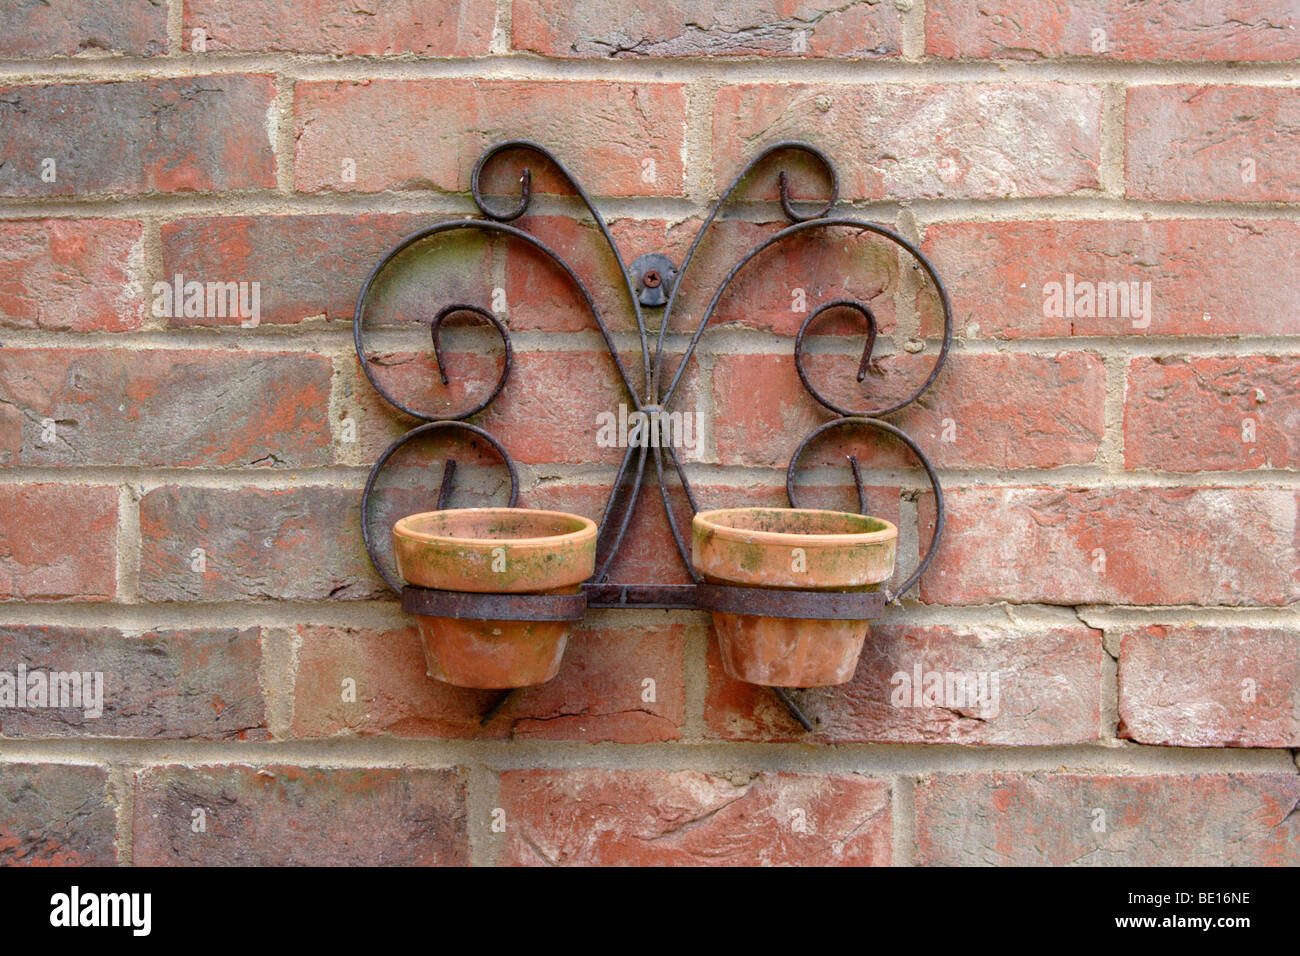 Empty terracotta pots hanging on wall in metal bracket Stock Photo